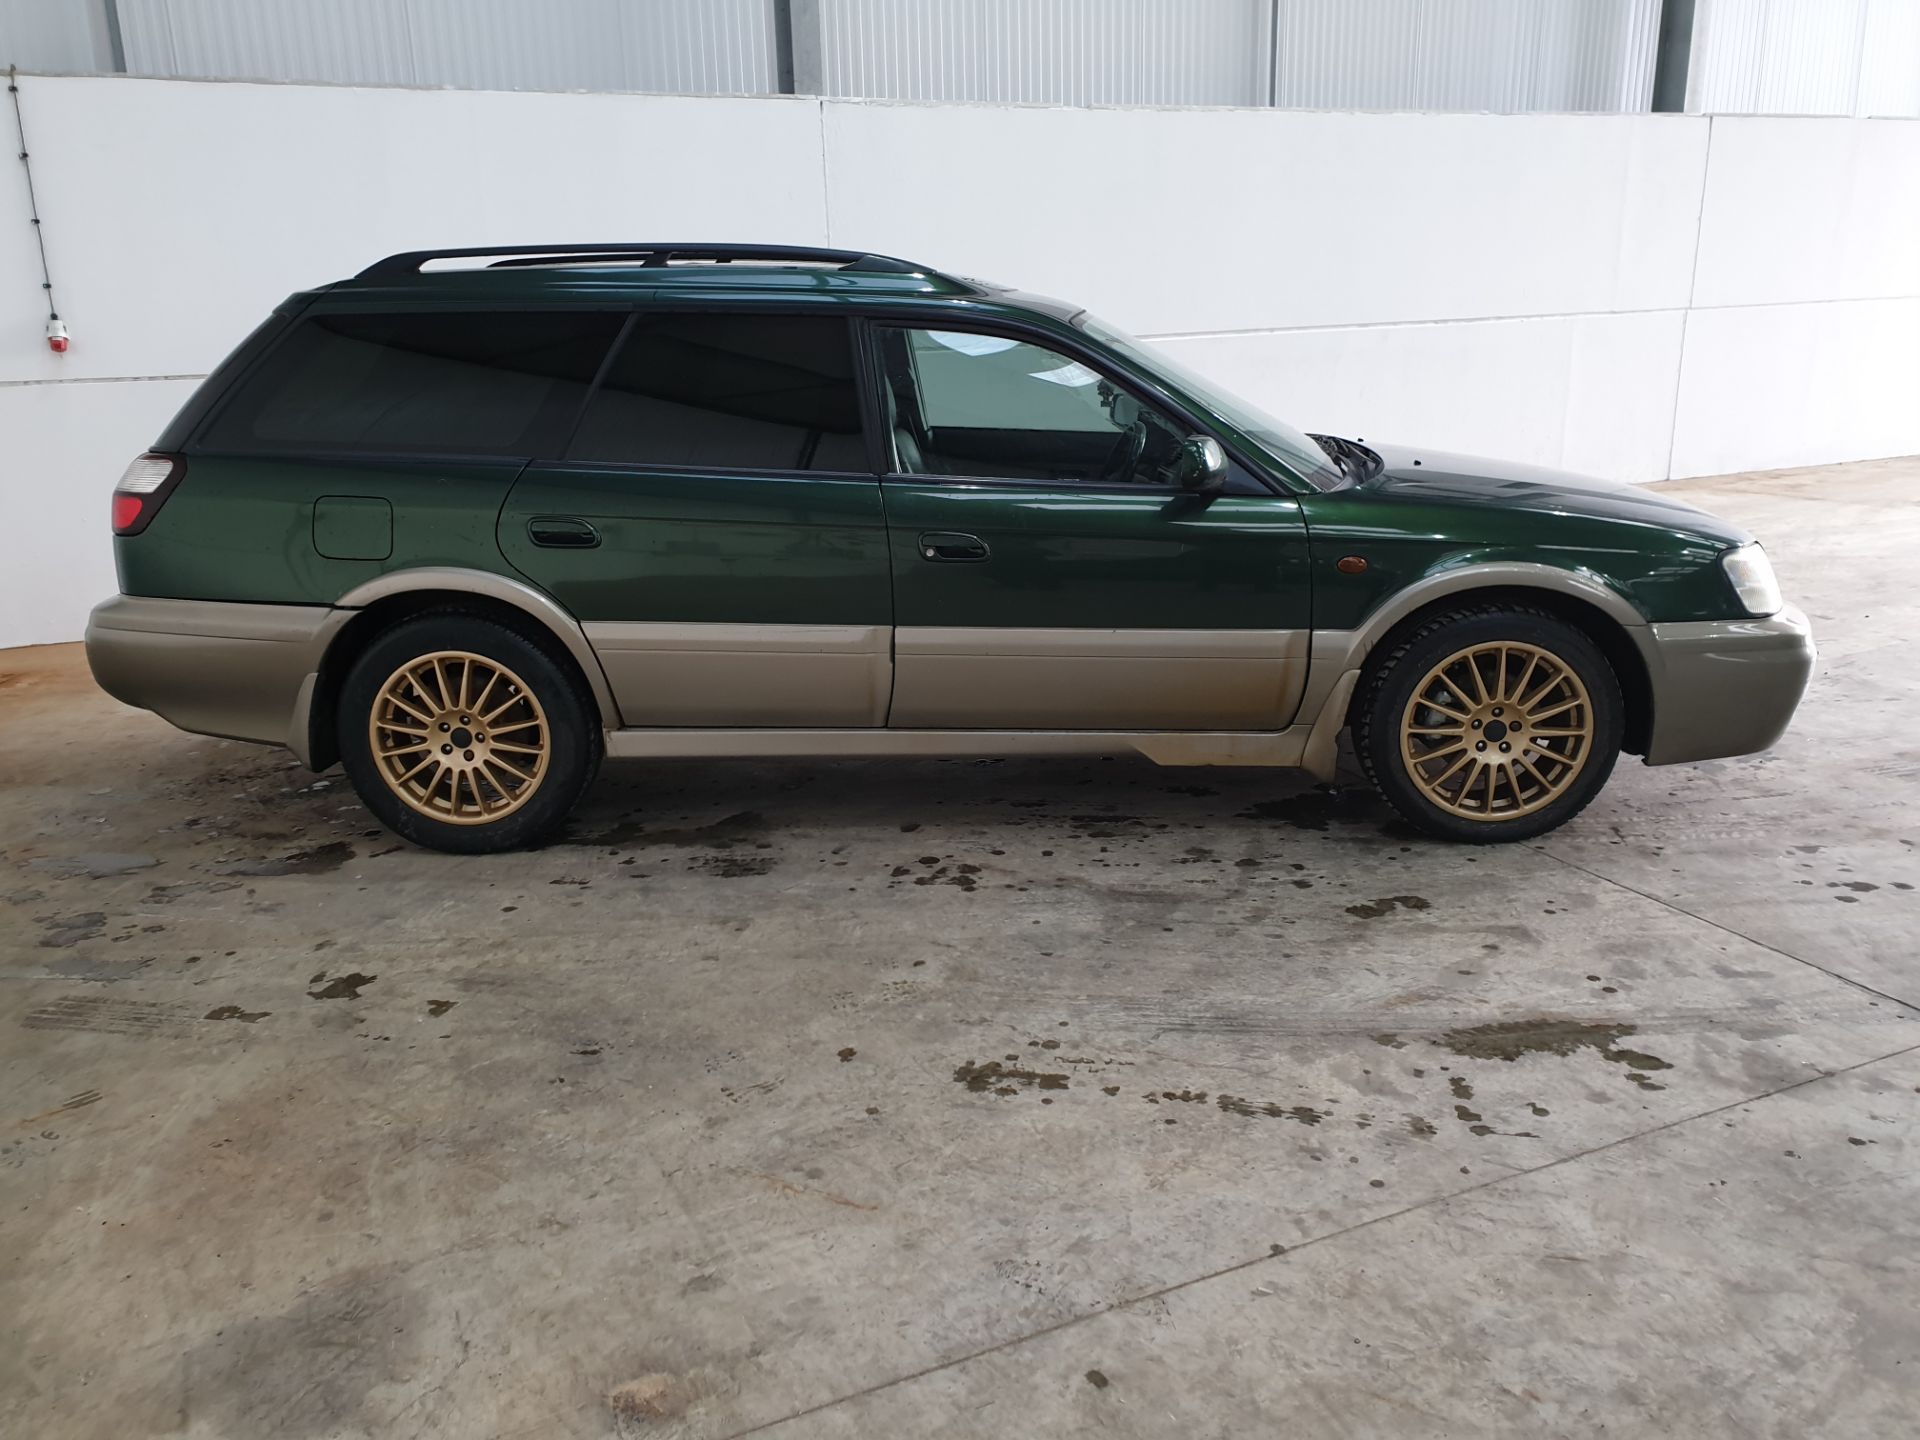 1998 Subaru Legacy estate - Image 2 of 14